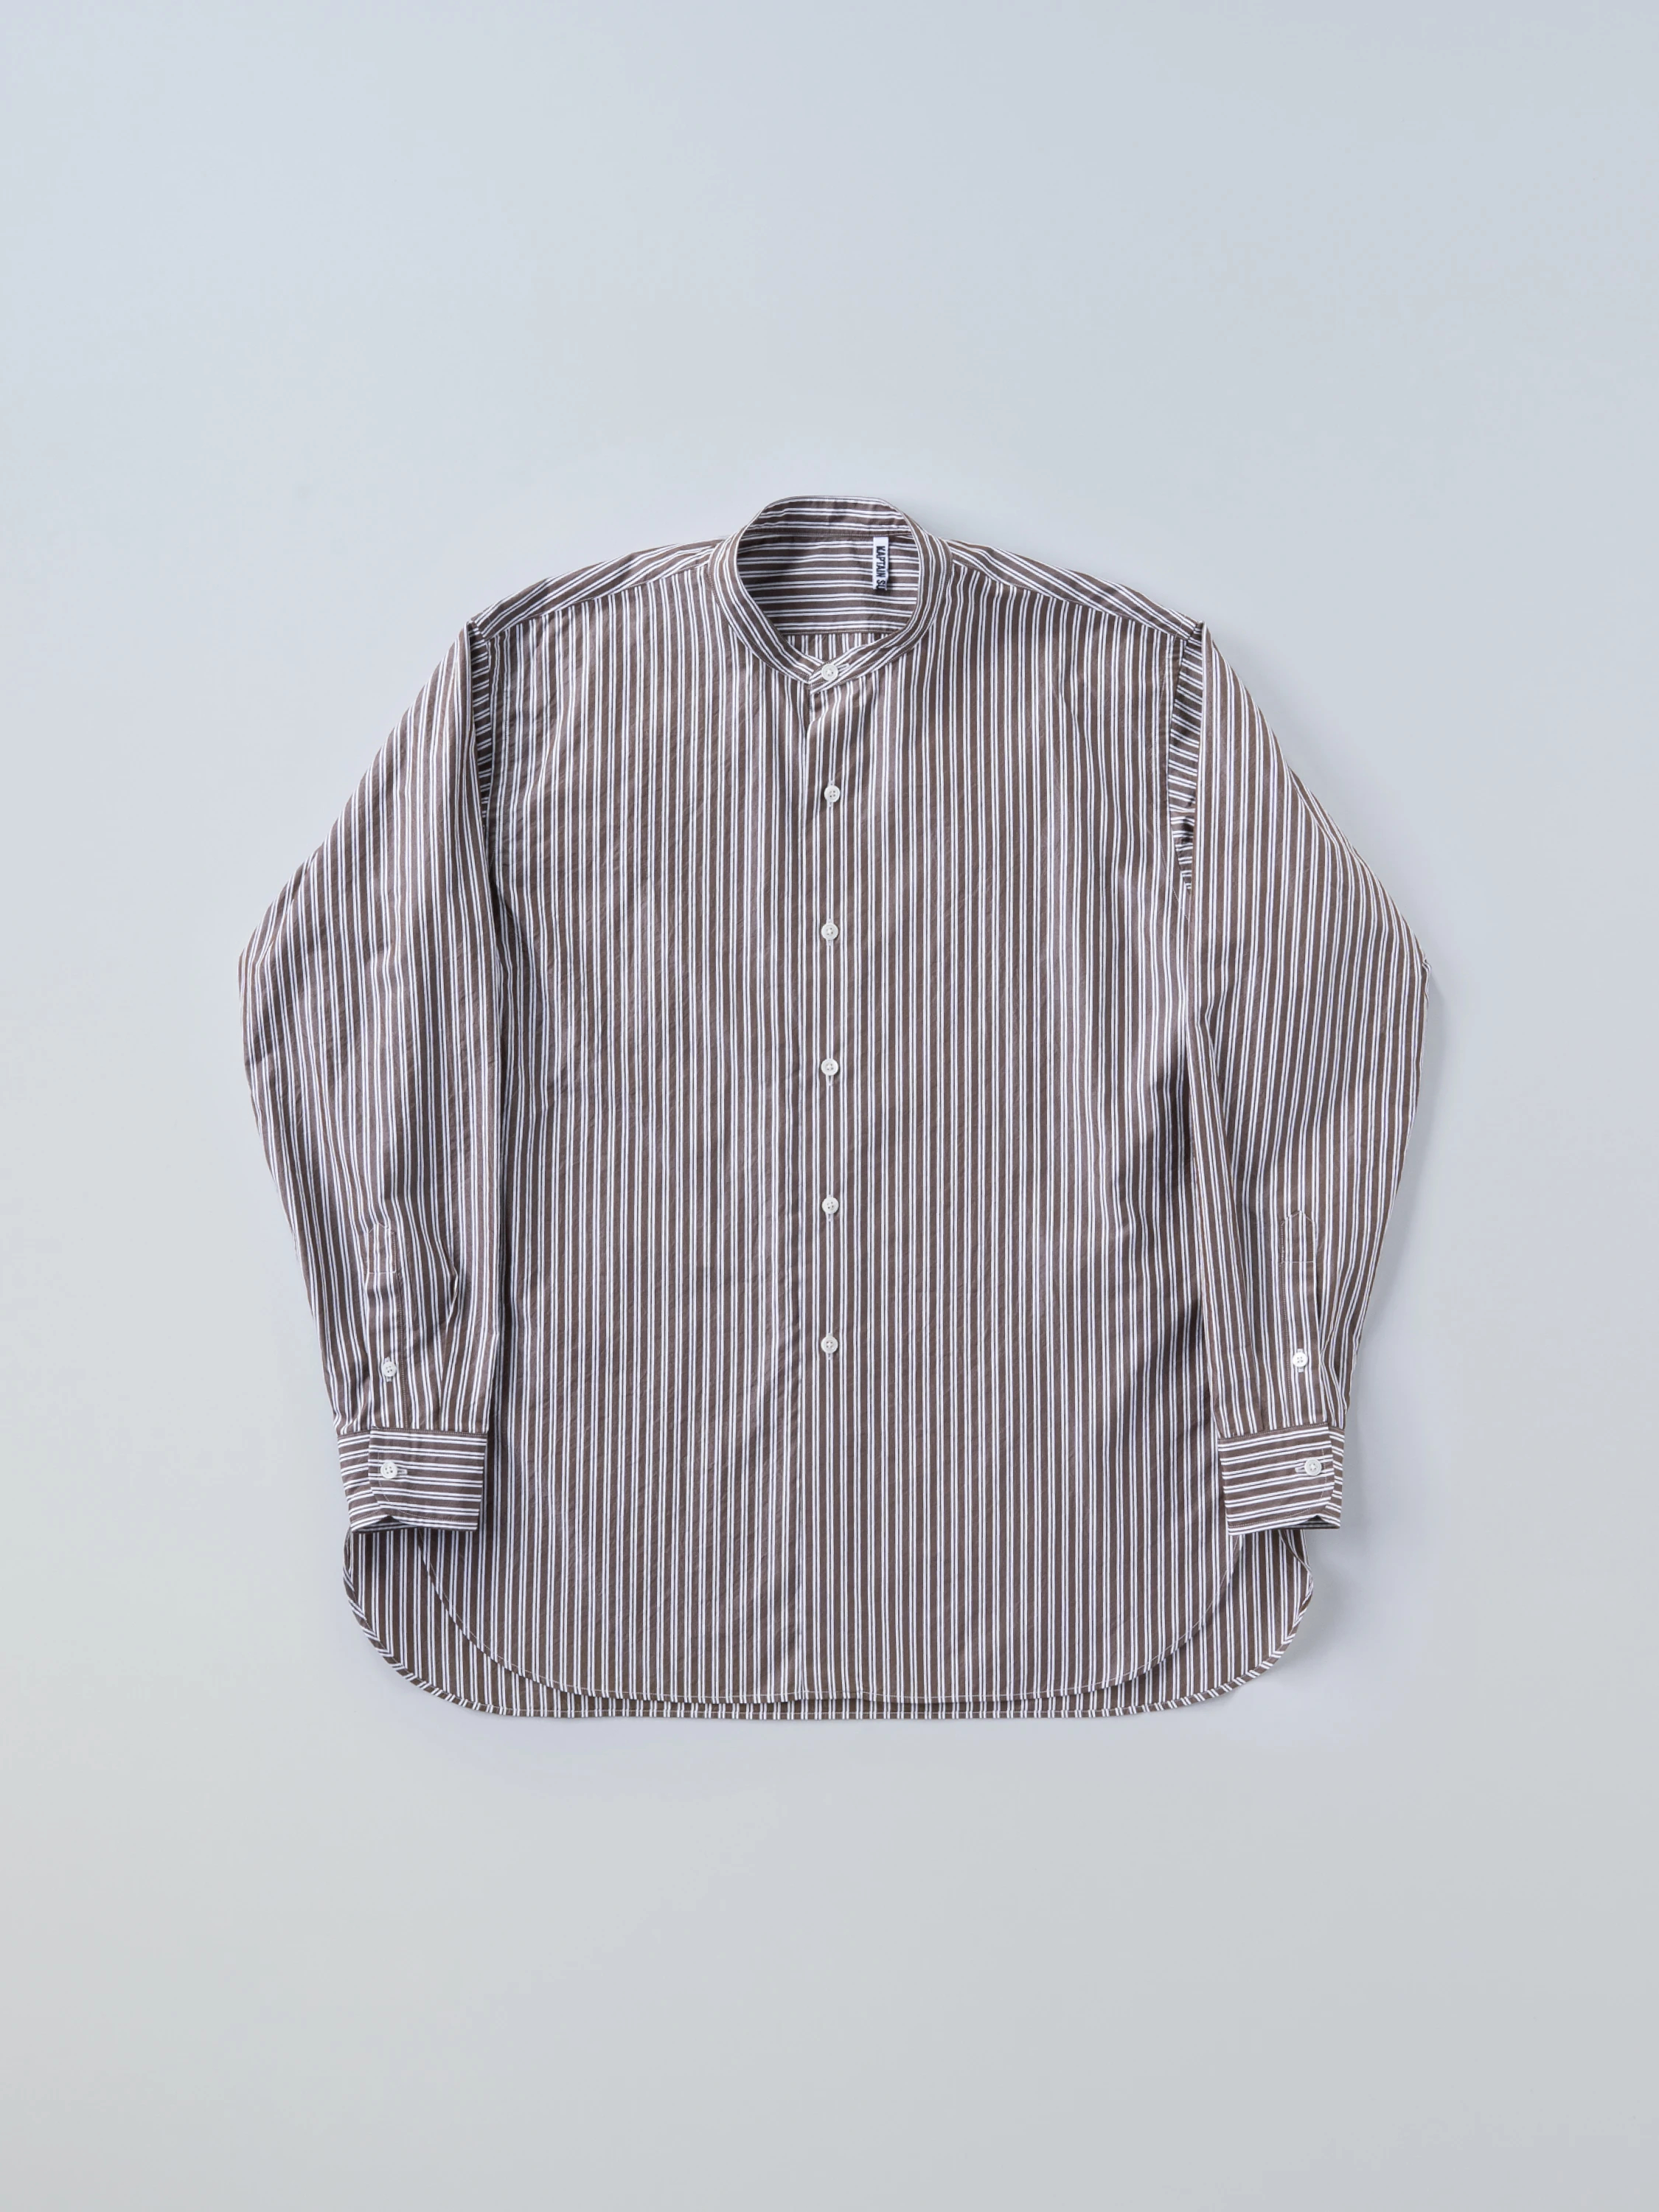 Stand Collar Shirt | SHIRTS | KAPTAIN SUNSHINE ONLINE STORE